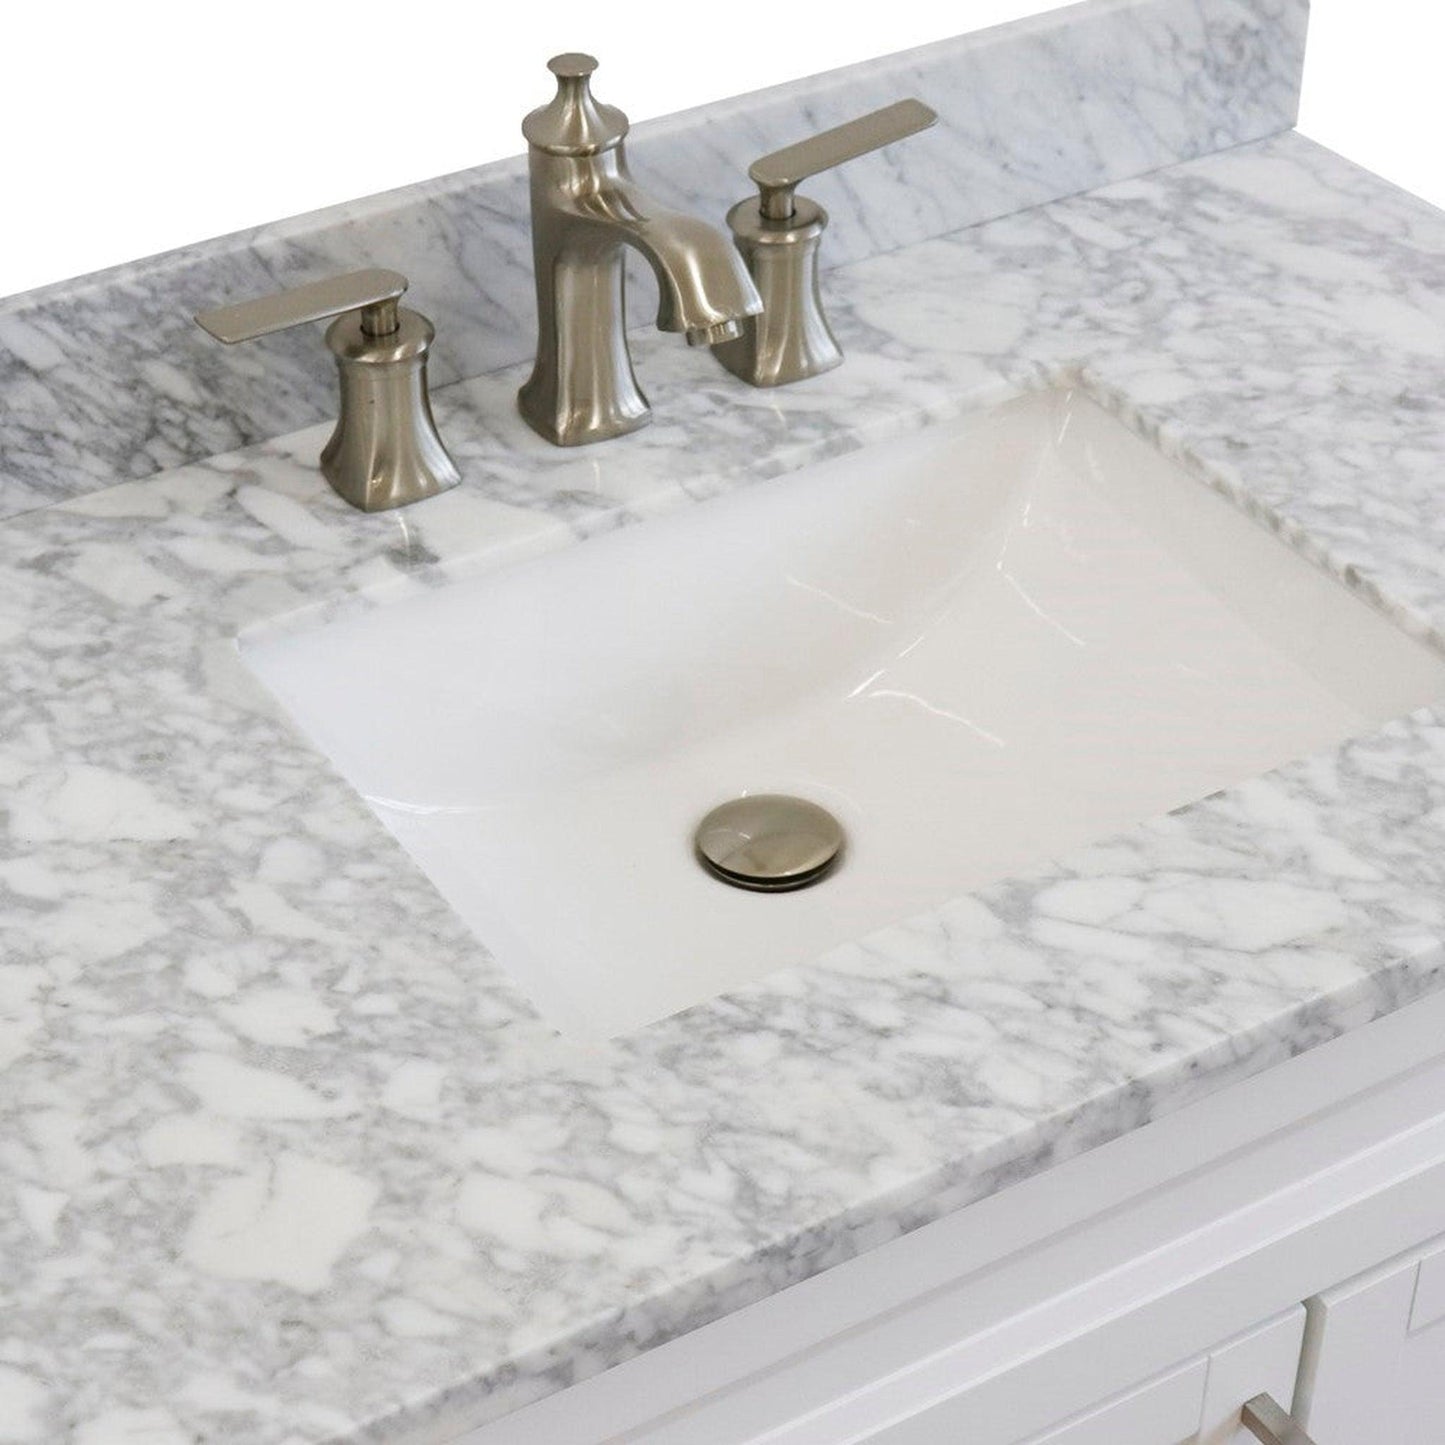 Bellaterra Home Terni 37" 1-Door 2-Drawer White Freestanding Vanity Set With Ceramic Center Undermount Rectangular Sink and White Carrara Marble Top, and Left Door Base